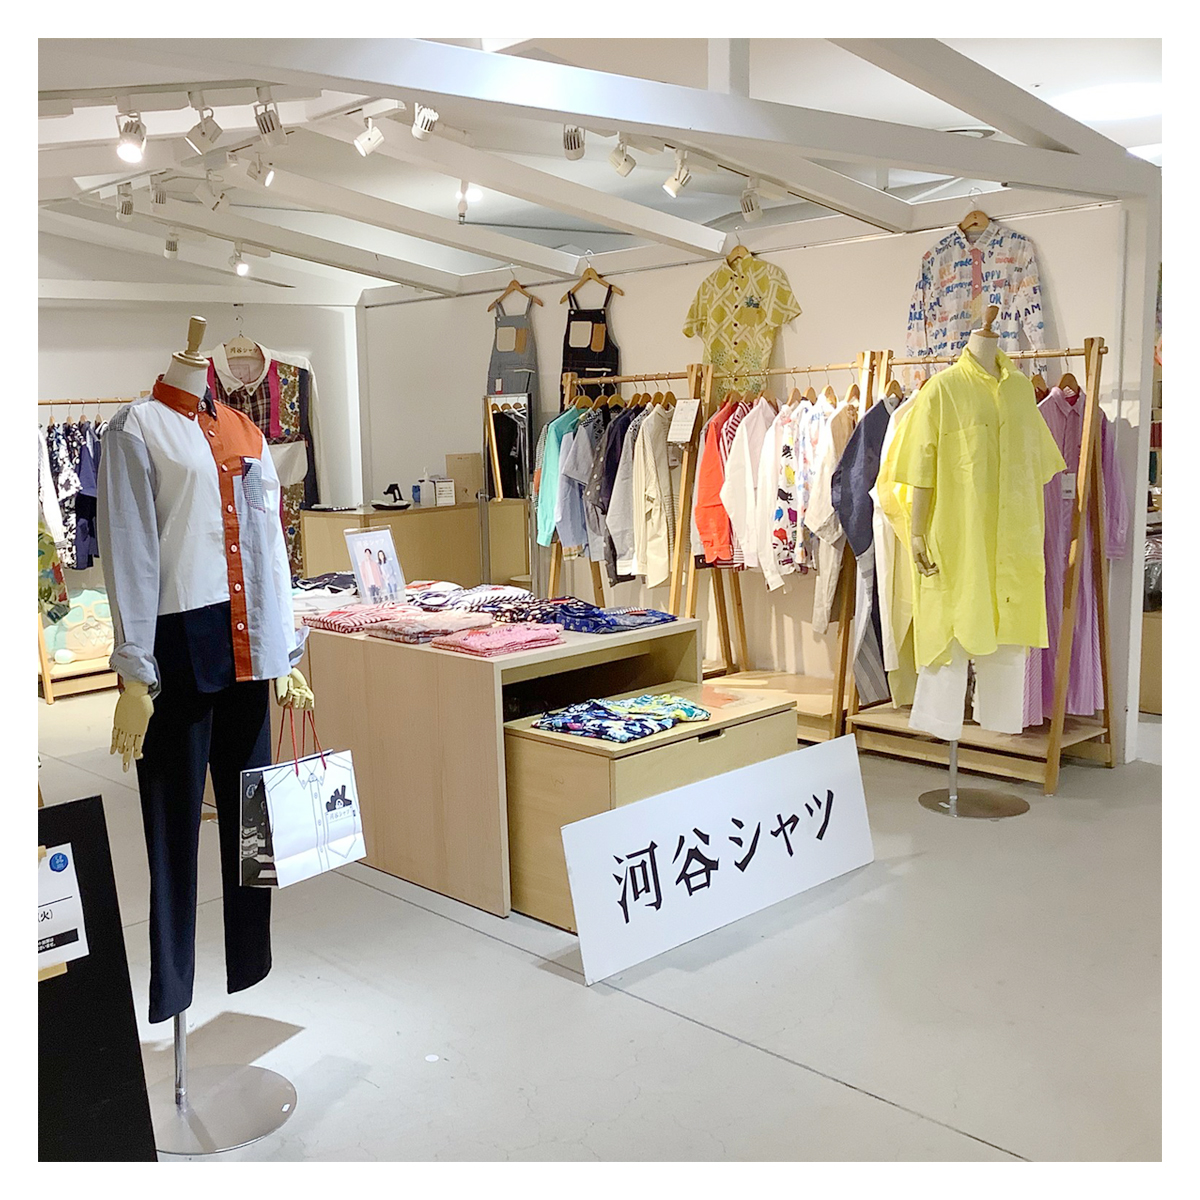 【New】阪急百貨店うめだ本店(大阪)にPOPUPSHOPがオープンしました♪